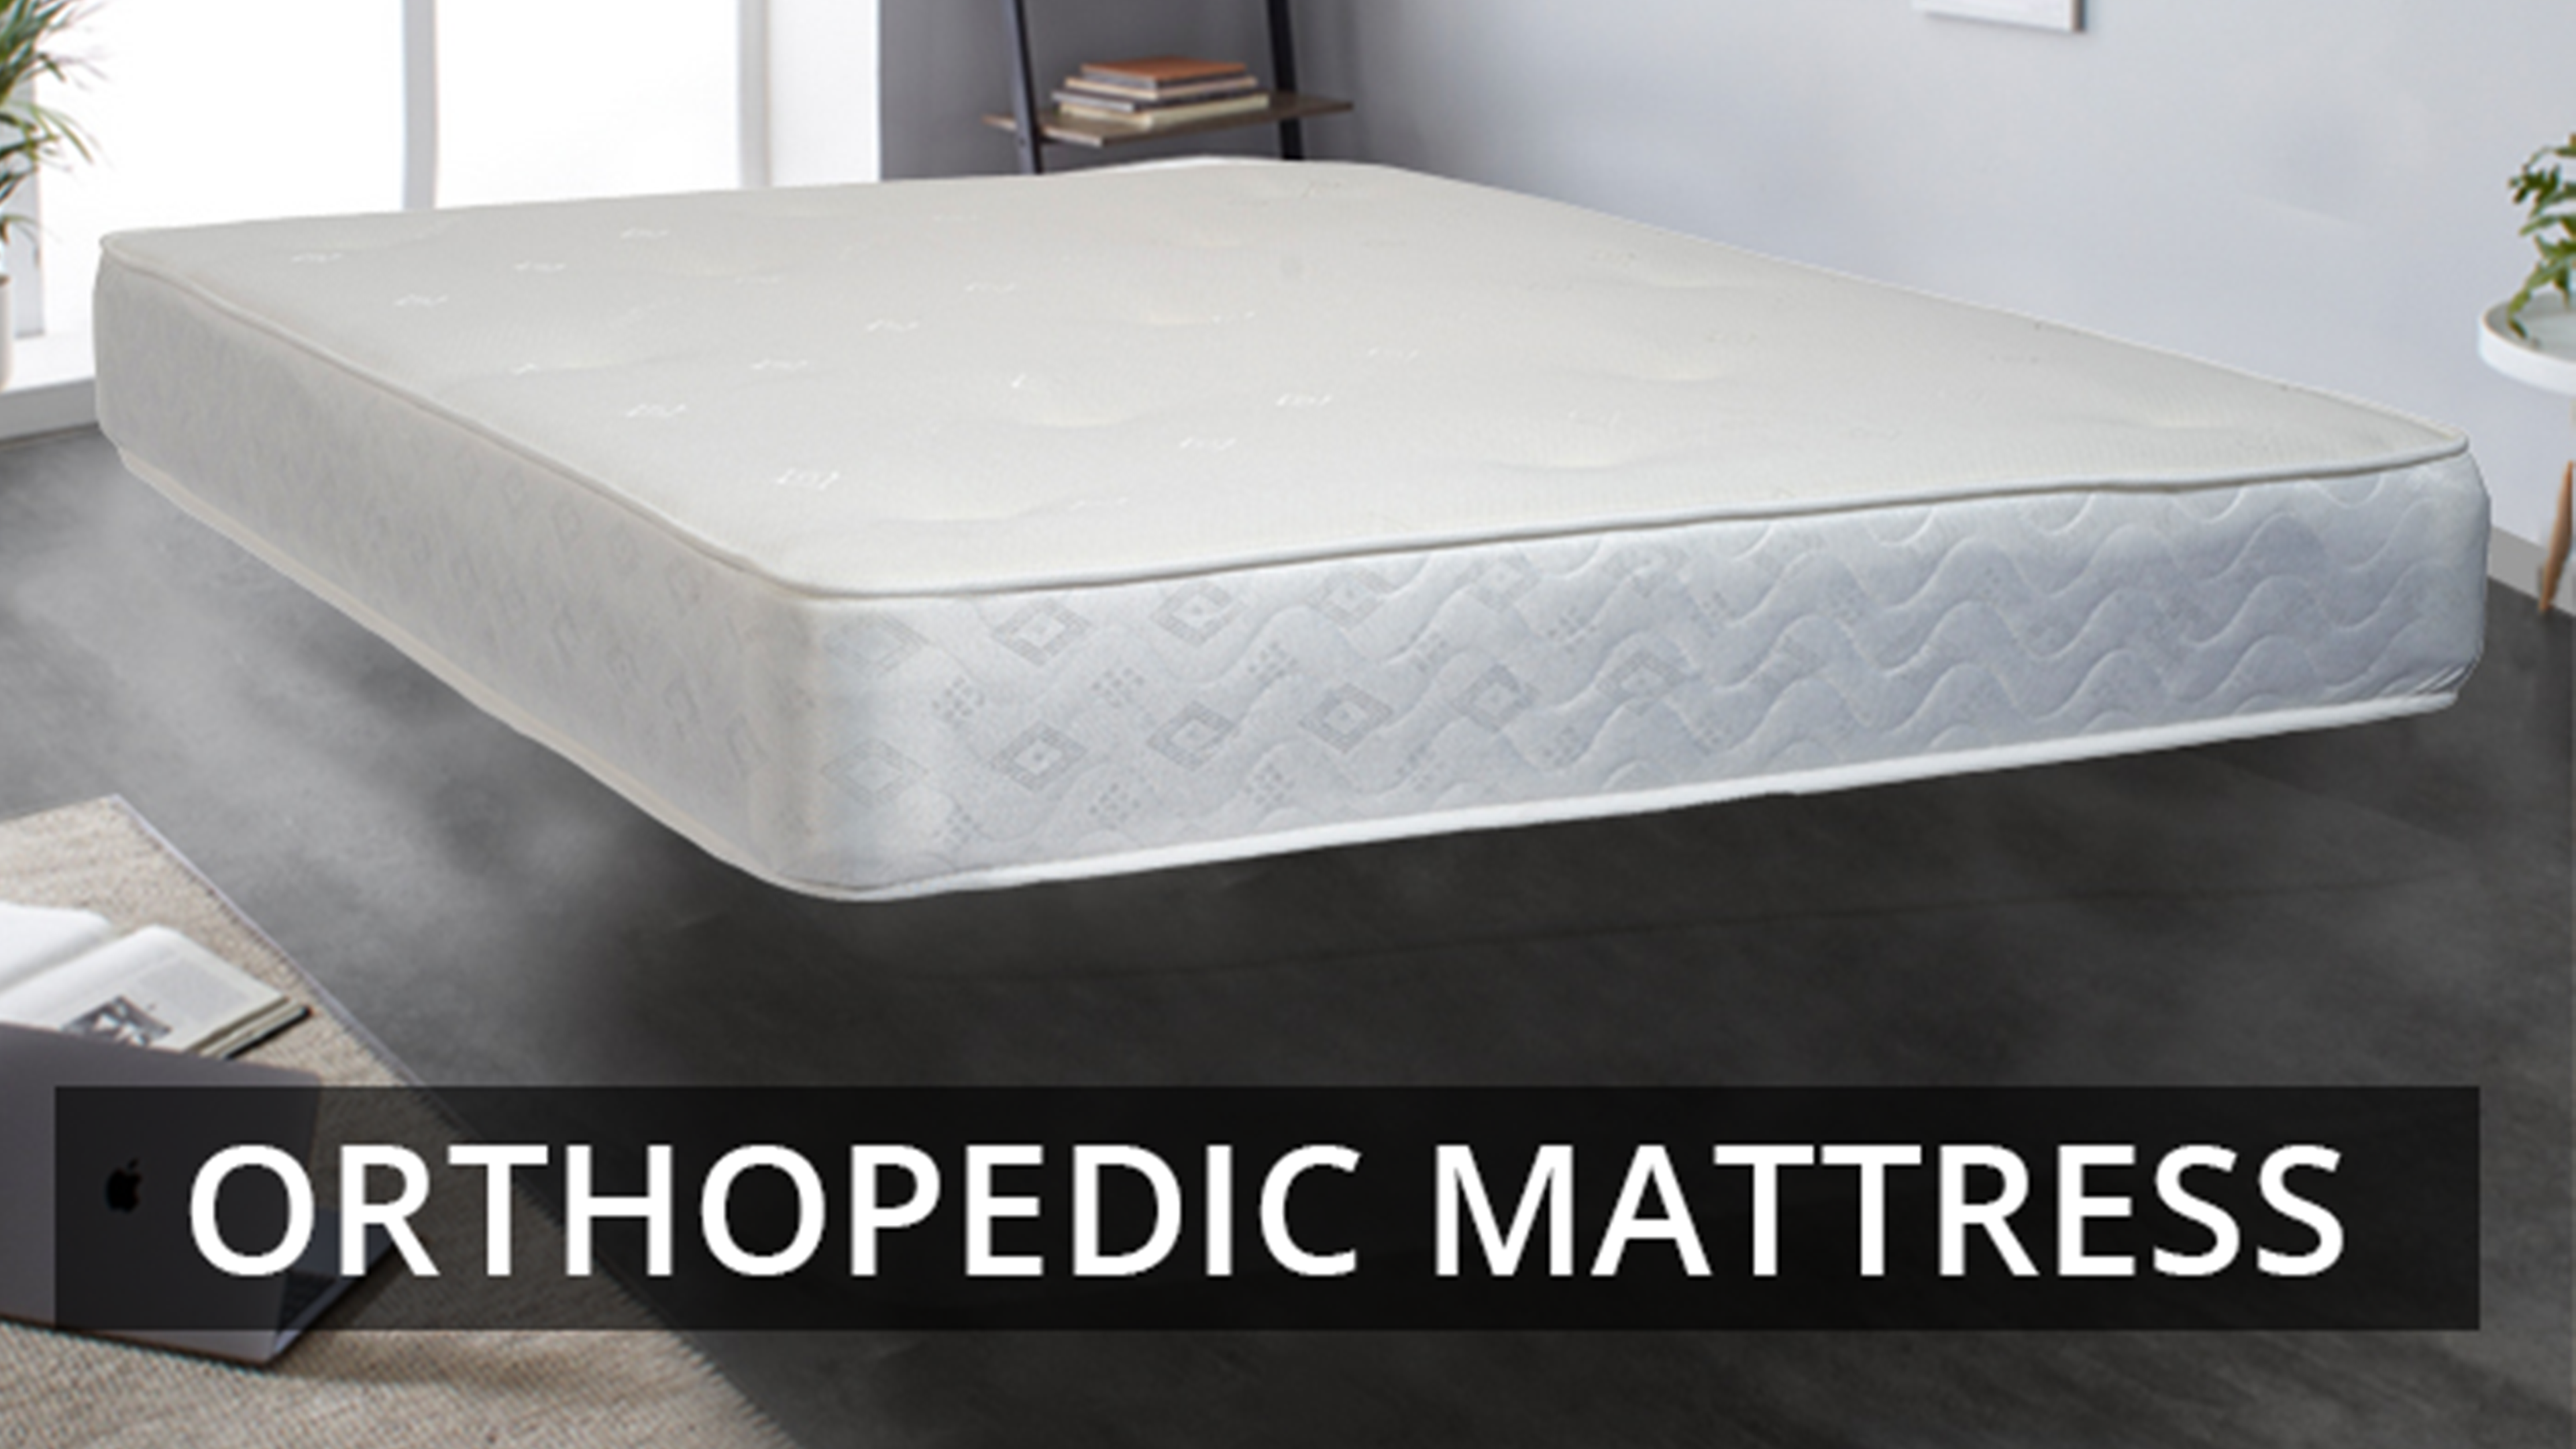 Grey Linen 3 Feet Divan Bed Set With Plain Headboard (Included Feet) And Free Memory Foam Mattress